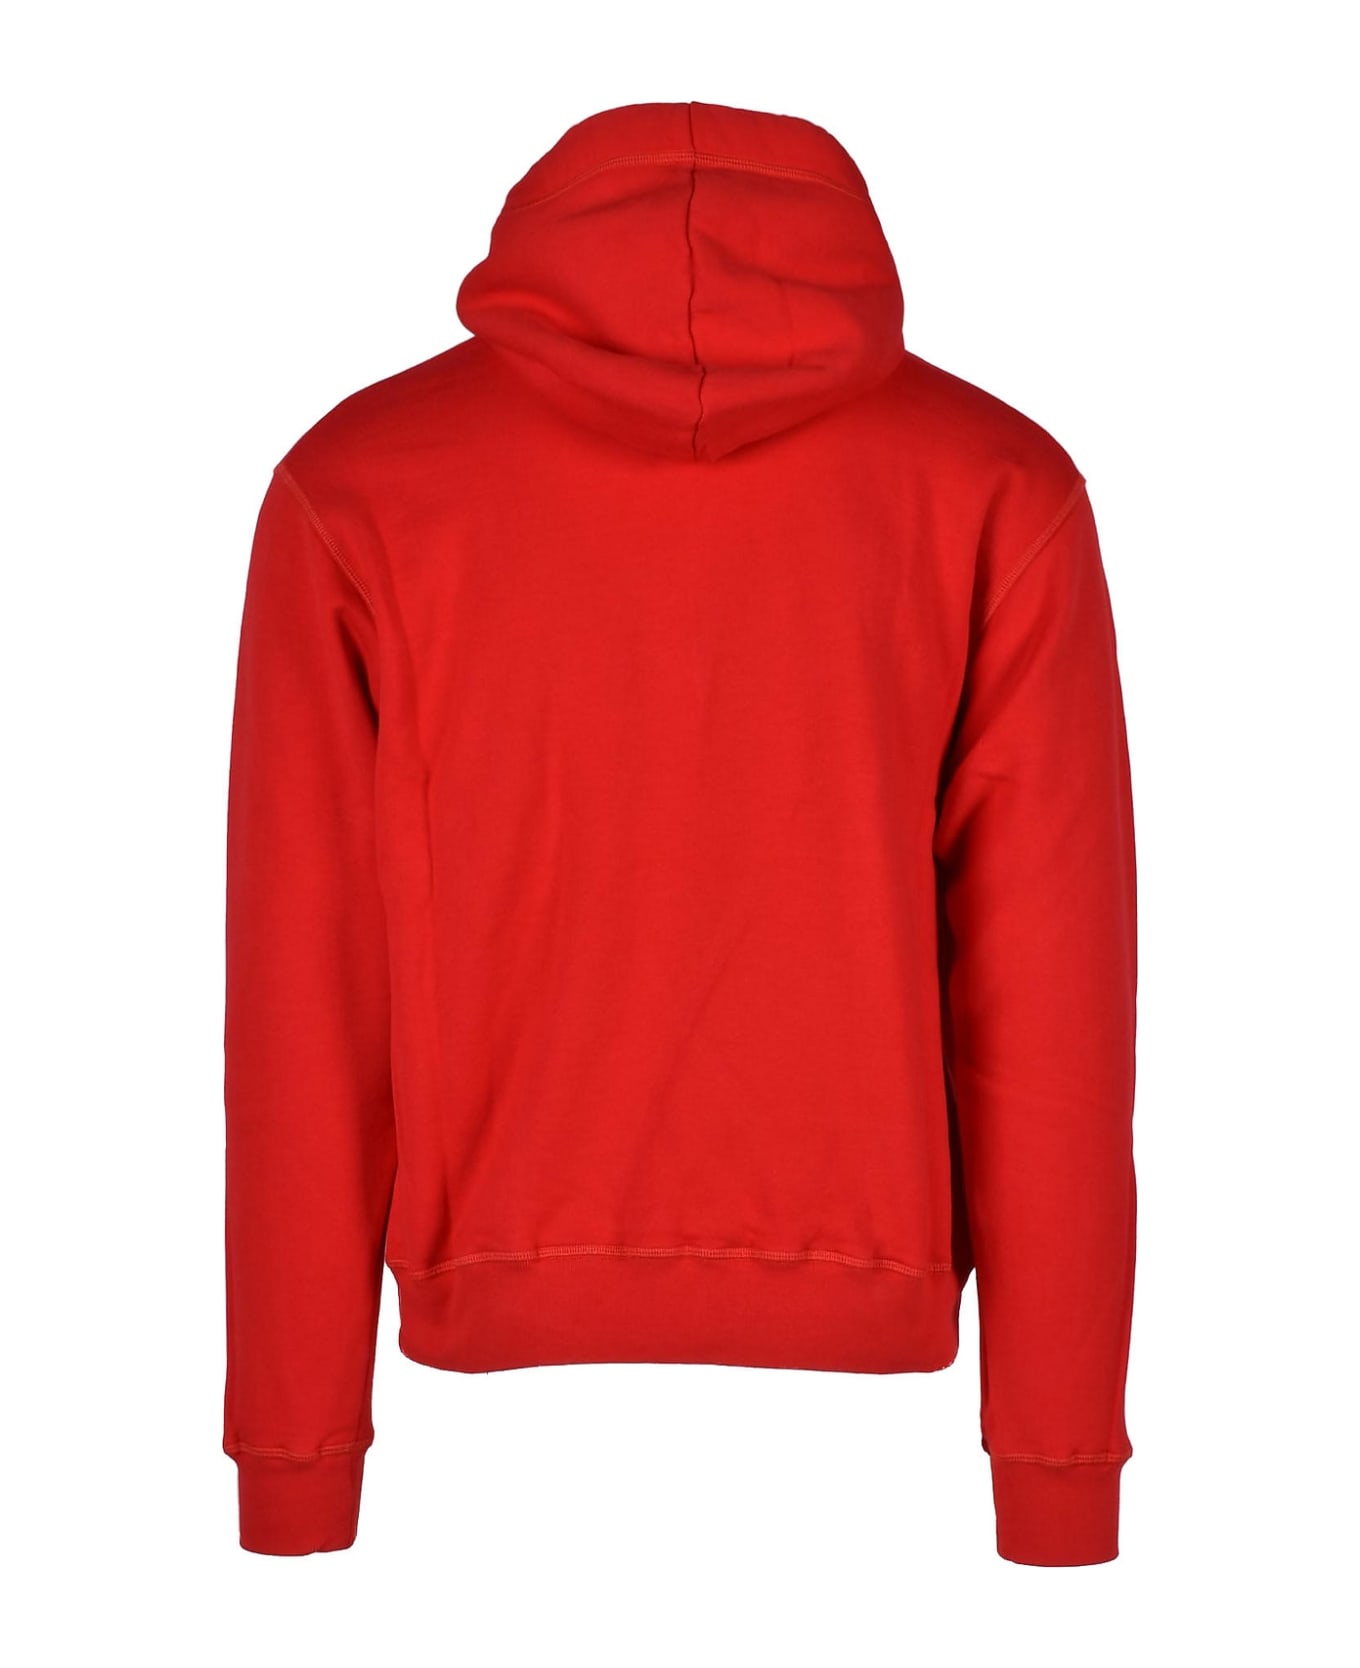 Dsquared2 Men's Red Sweatshirt - Red